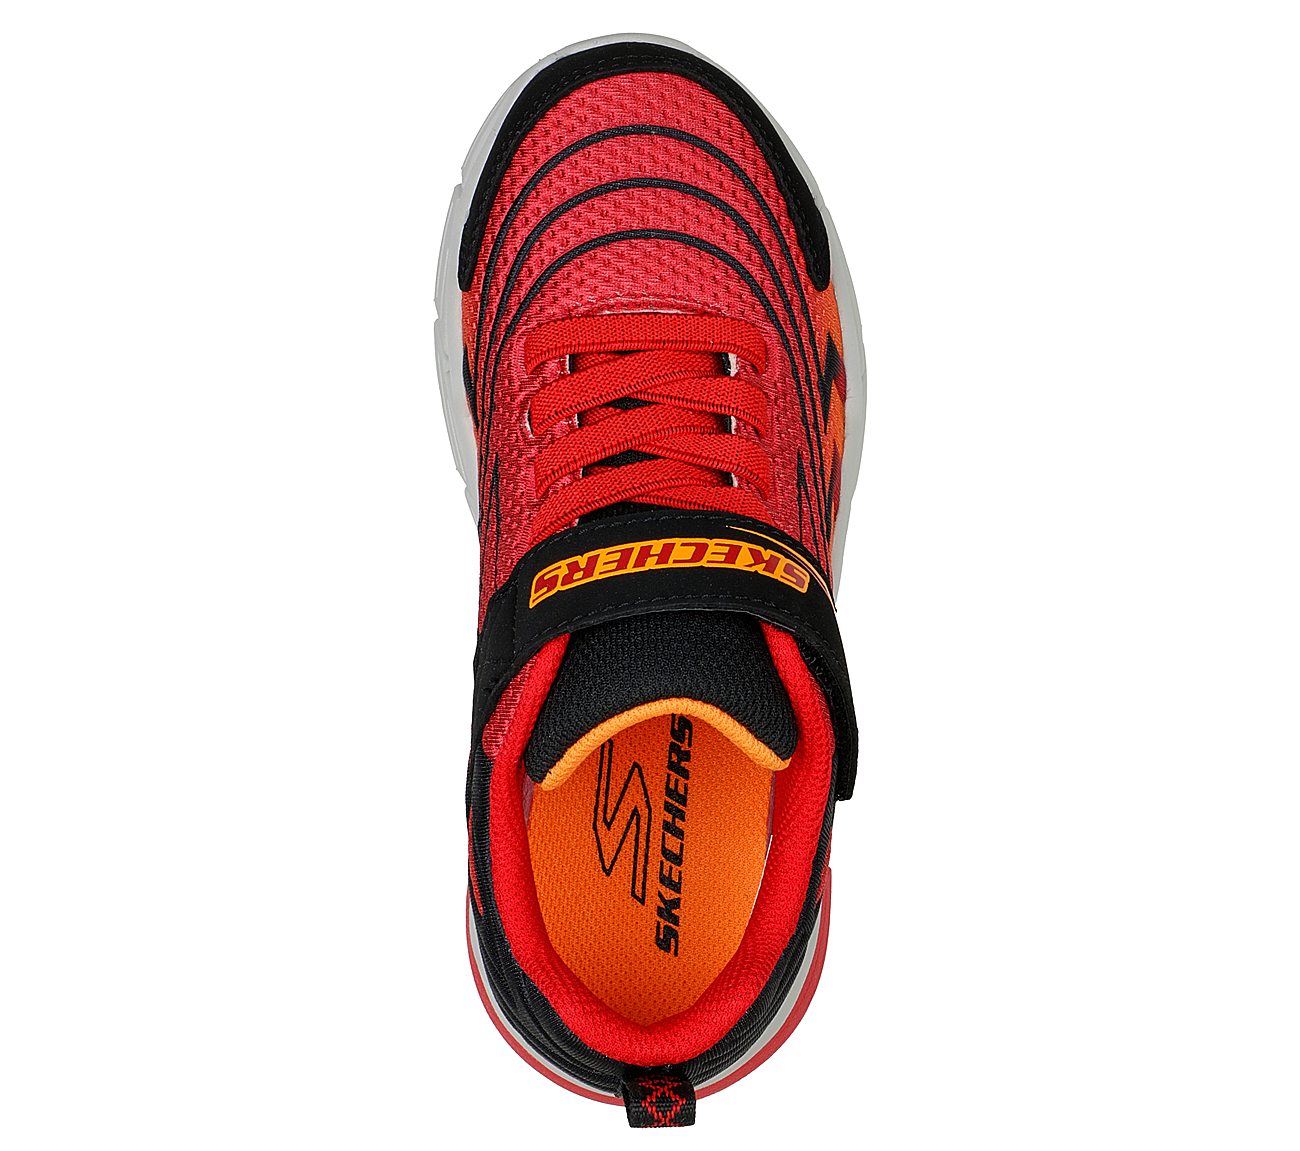 VECTOR-MATRIX - VOLTRONIK, RED Footwear Top View